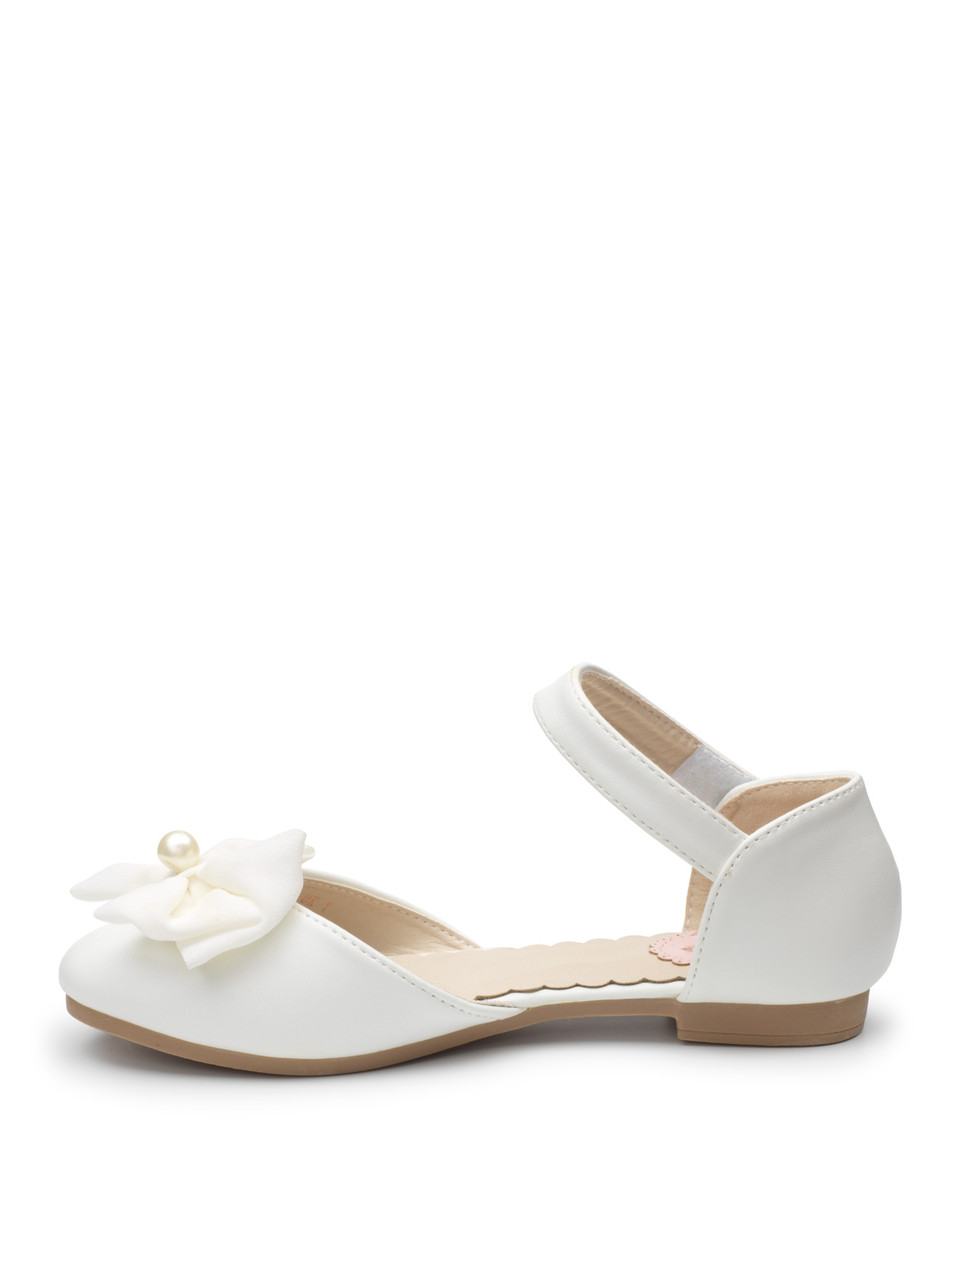 Girls ivory shoes | Ivory bridesmaid girl shoes | Heather